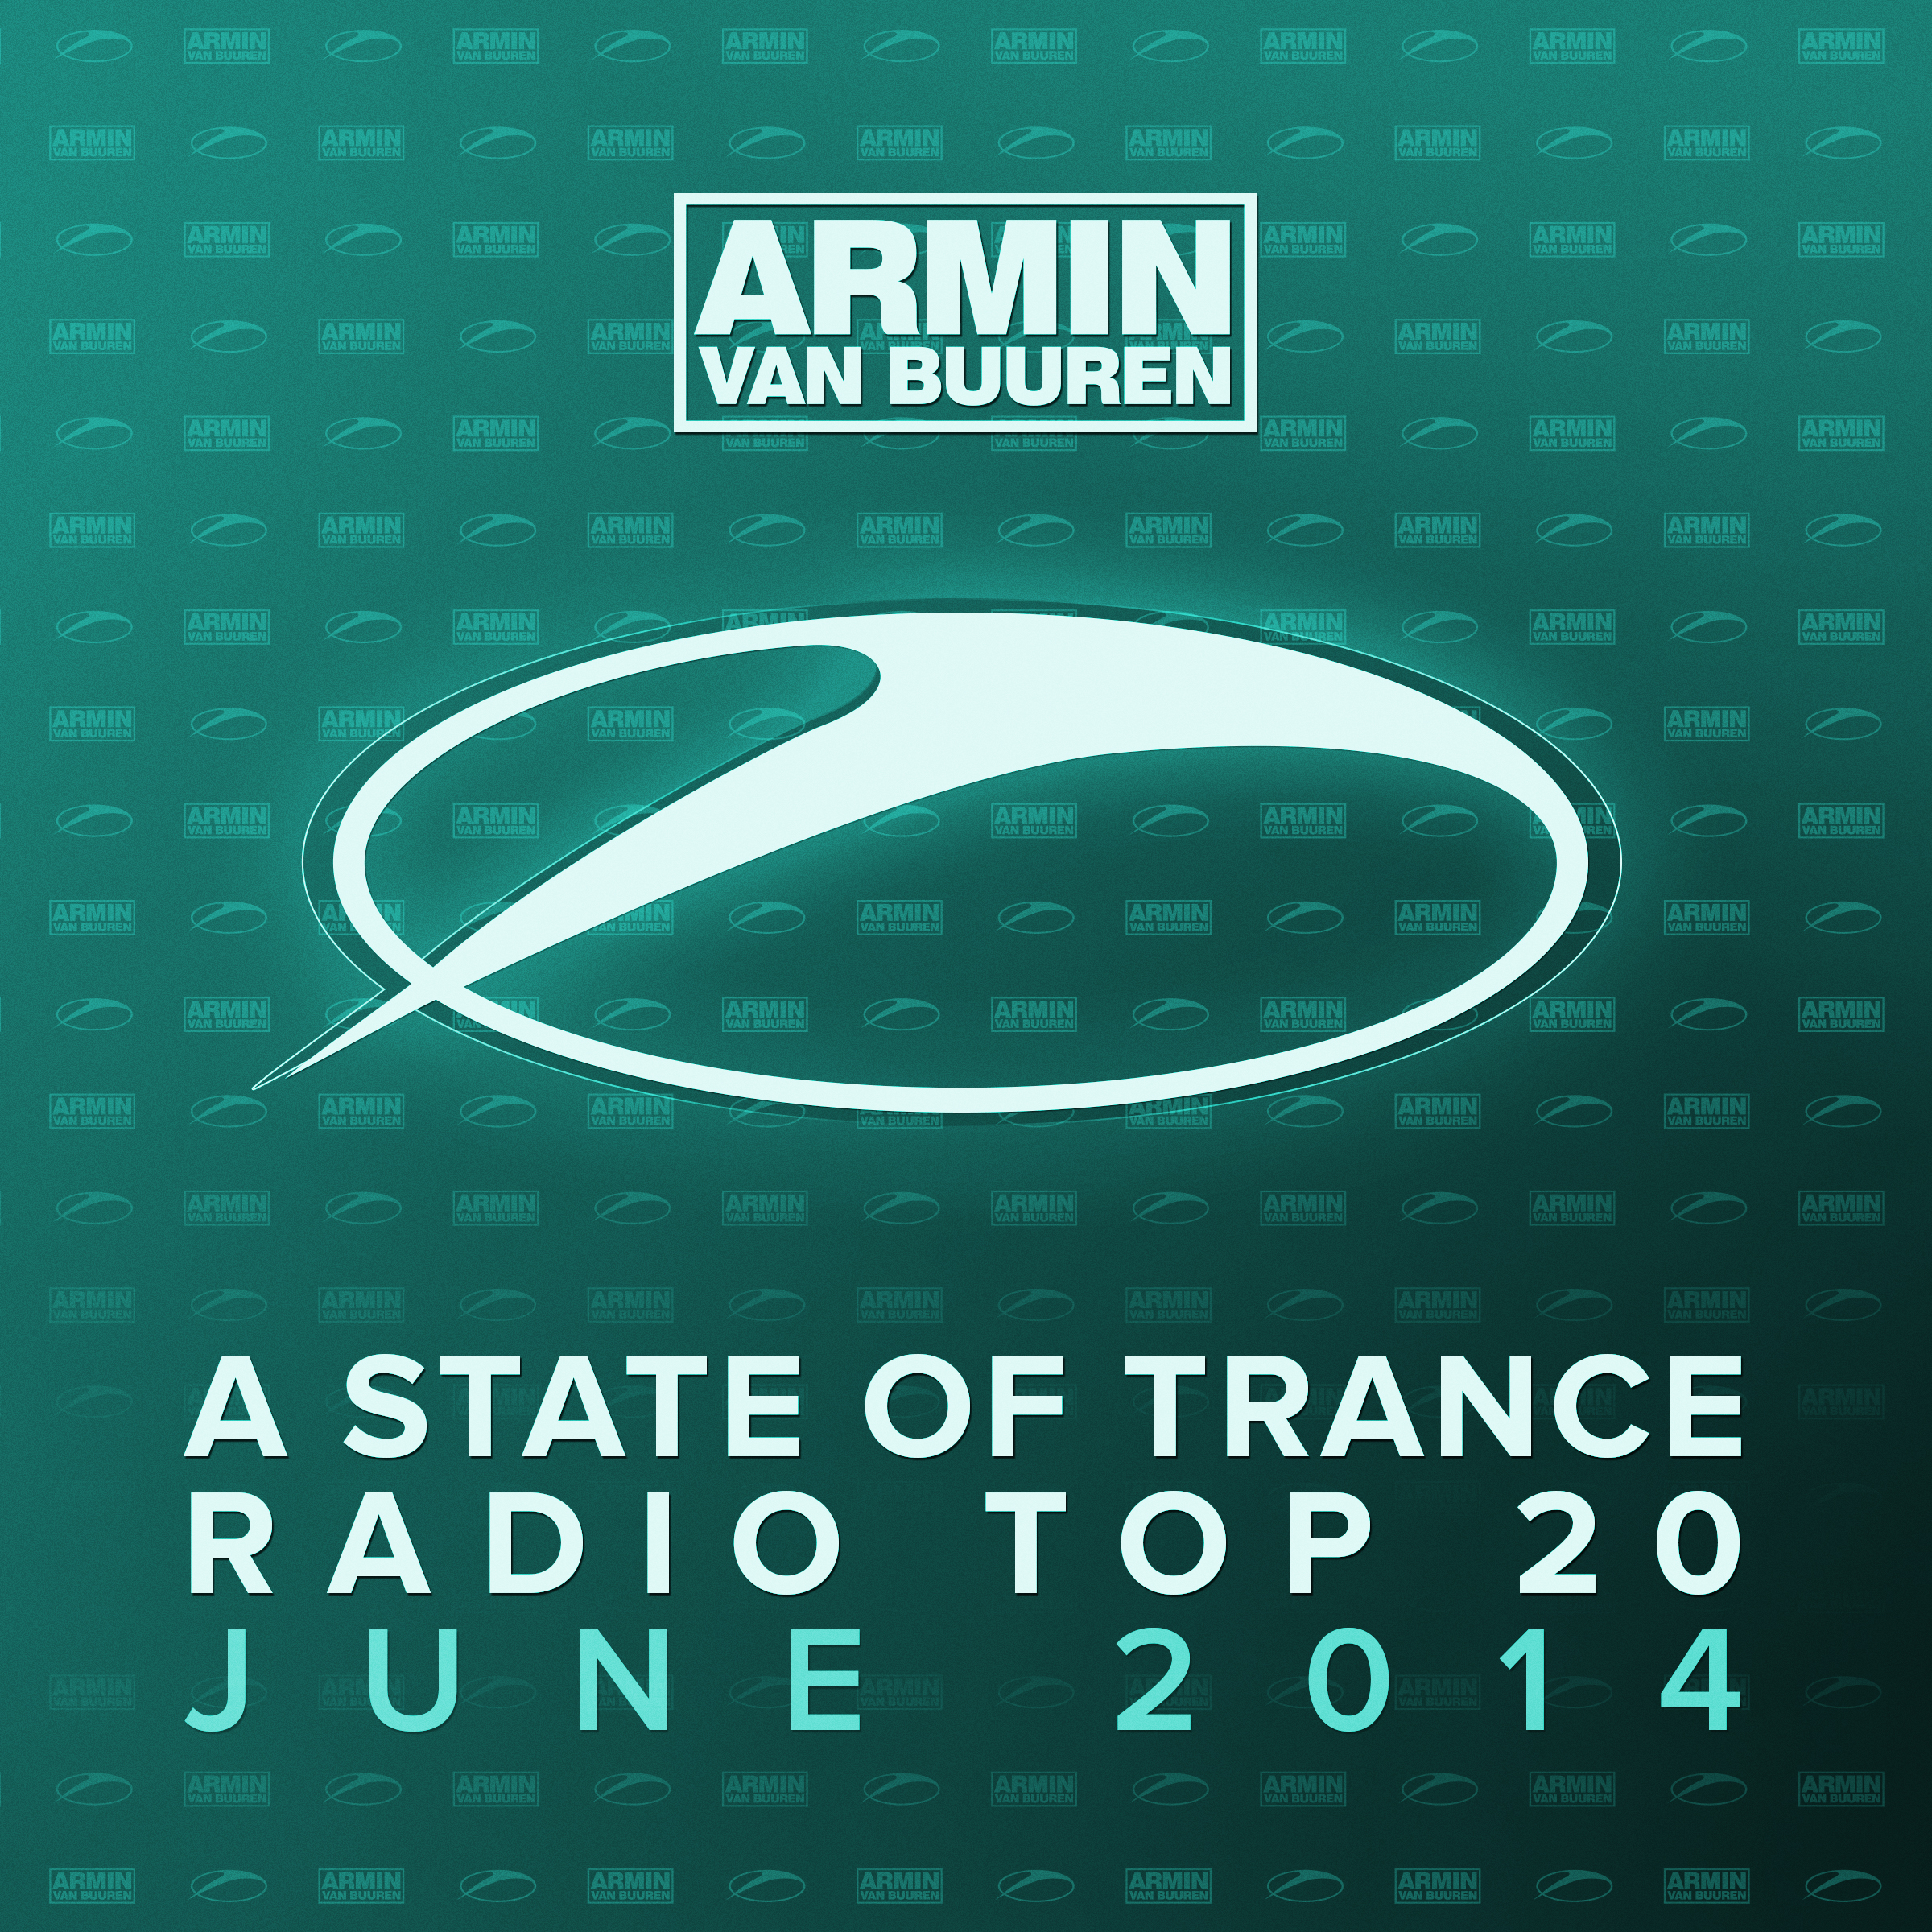 Íoslódáil Armin van Buuren & Andrew Rayel - EIFORYA (Ben Gold Remix) [ASOT Radio Top 20 - June 2014]